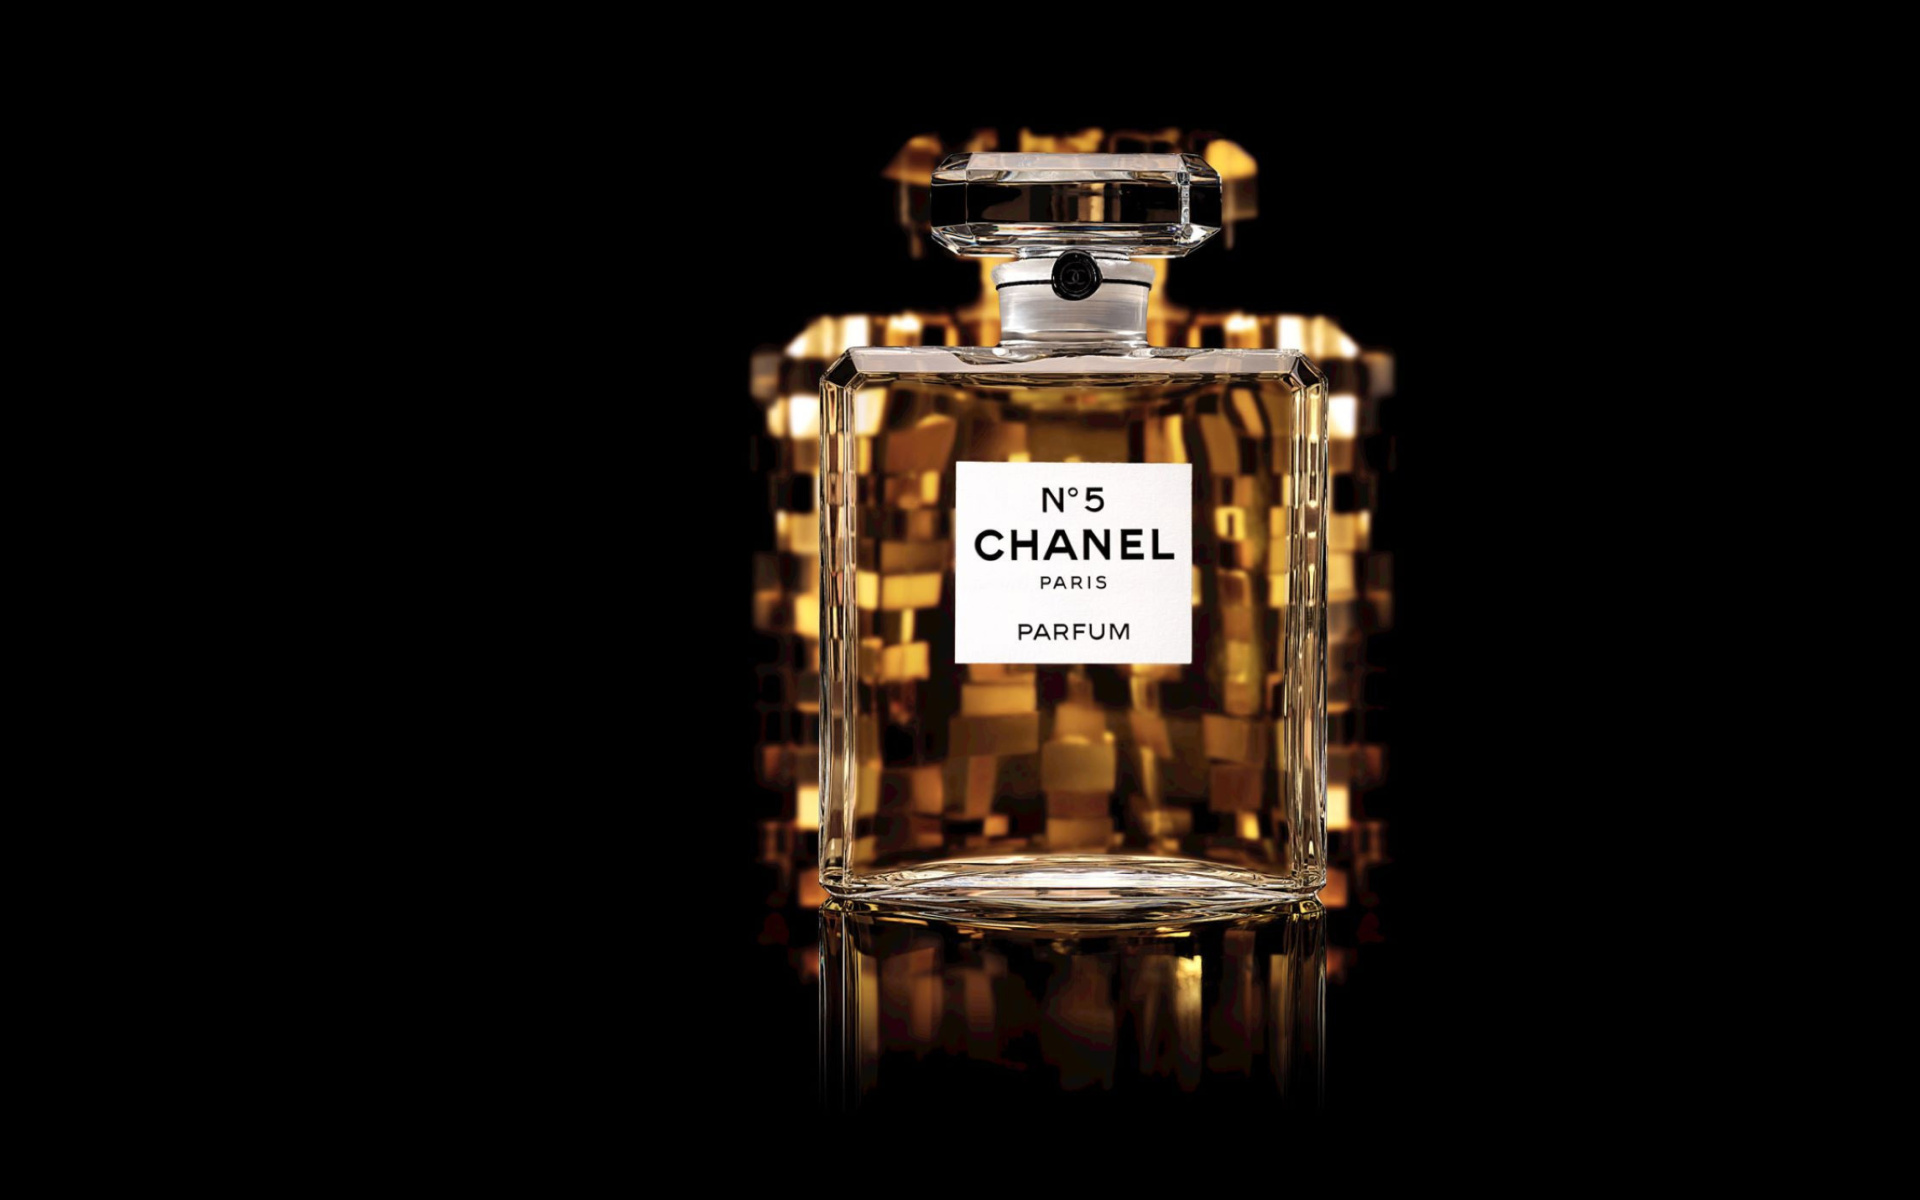 Das Chanel 5 Fragrance Perfume Wallpaper 1920x1200